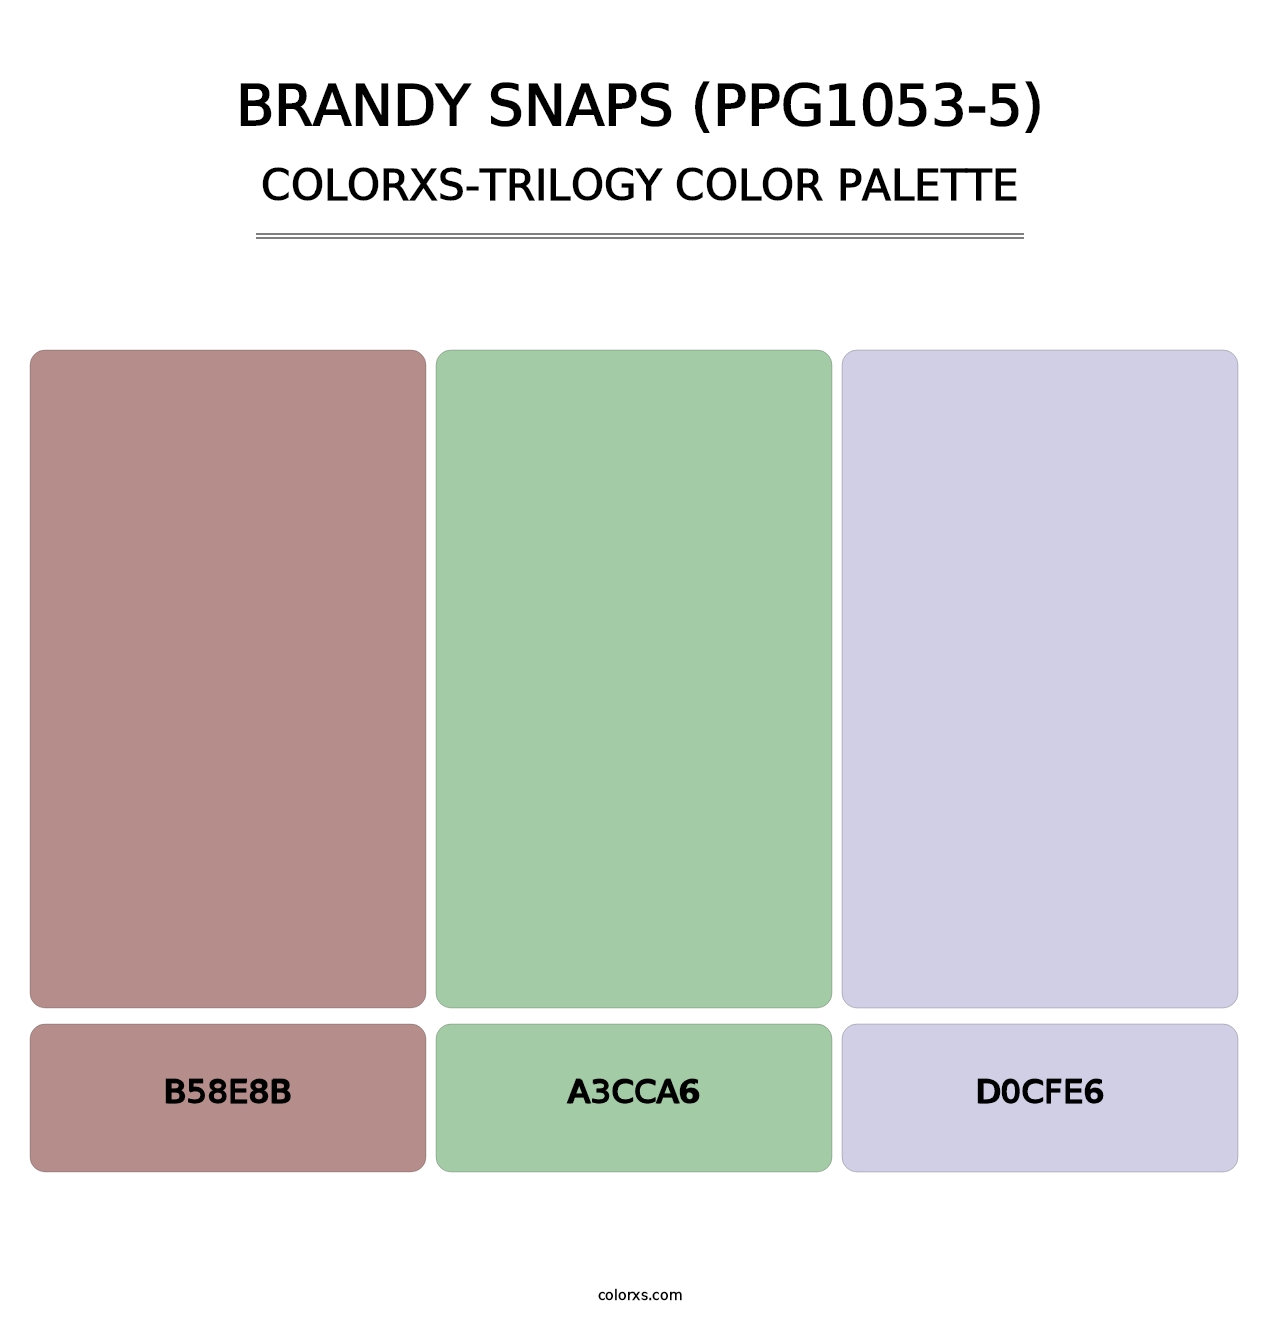 Brandy Snaps (PPG1053-5) - Colorxs Trilogy Palette